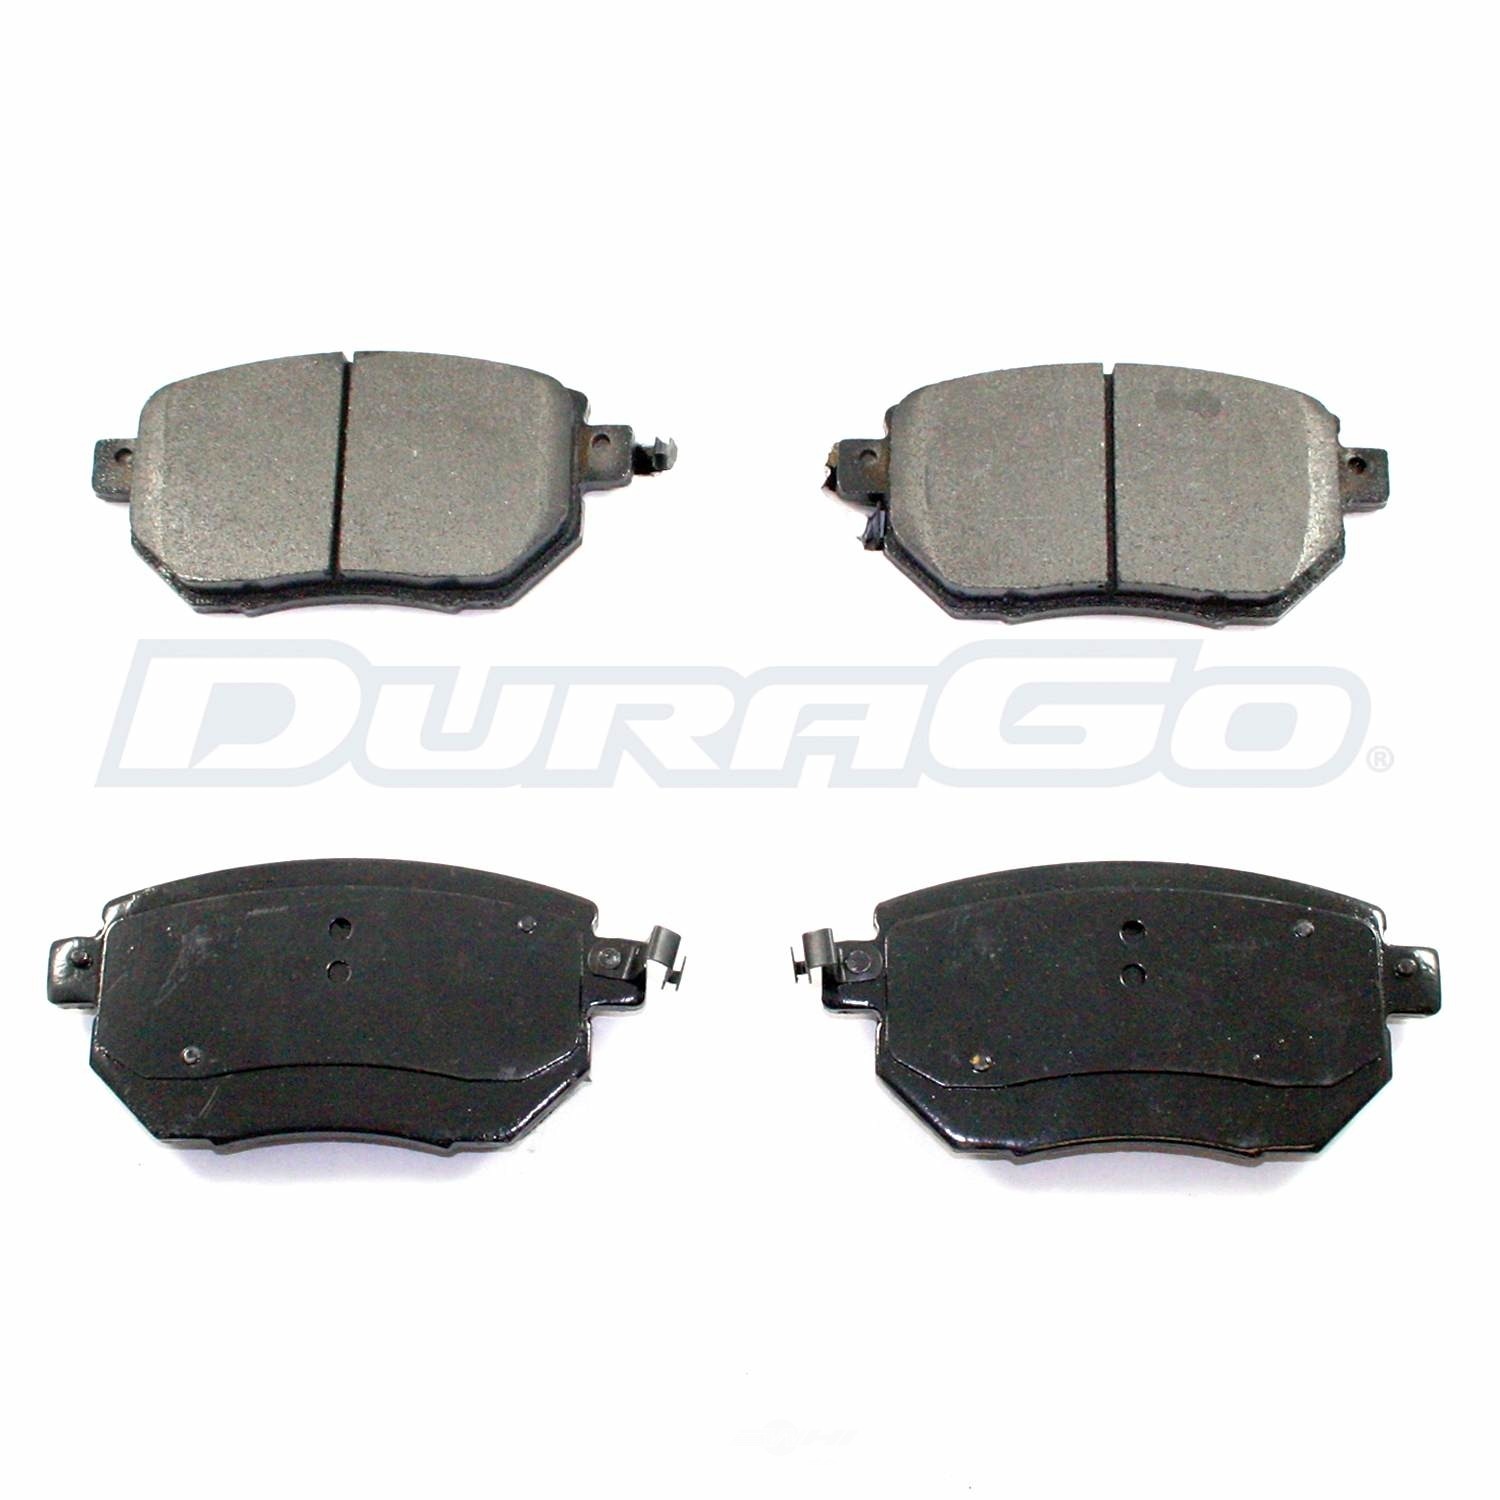 DURAGO - Disc Brake Pad (Front) - D48 BP969C